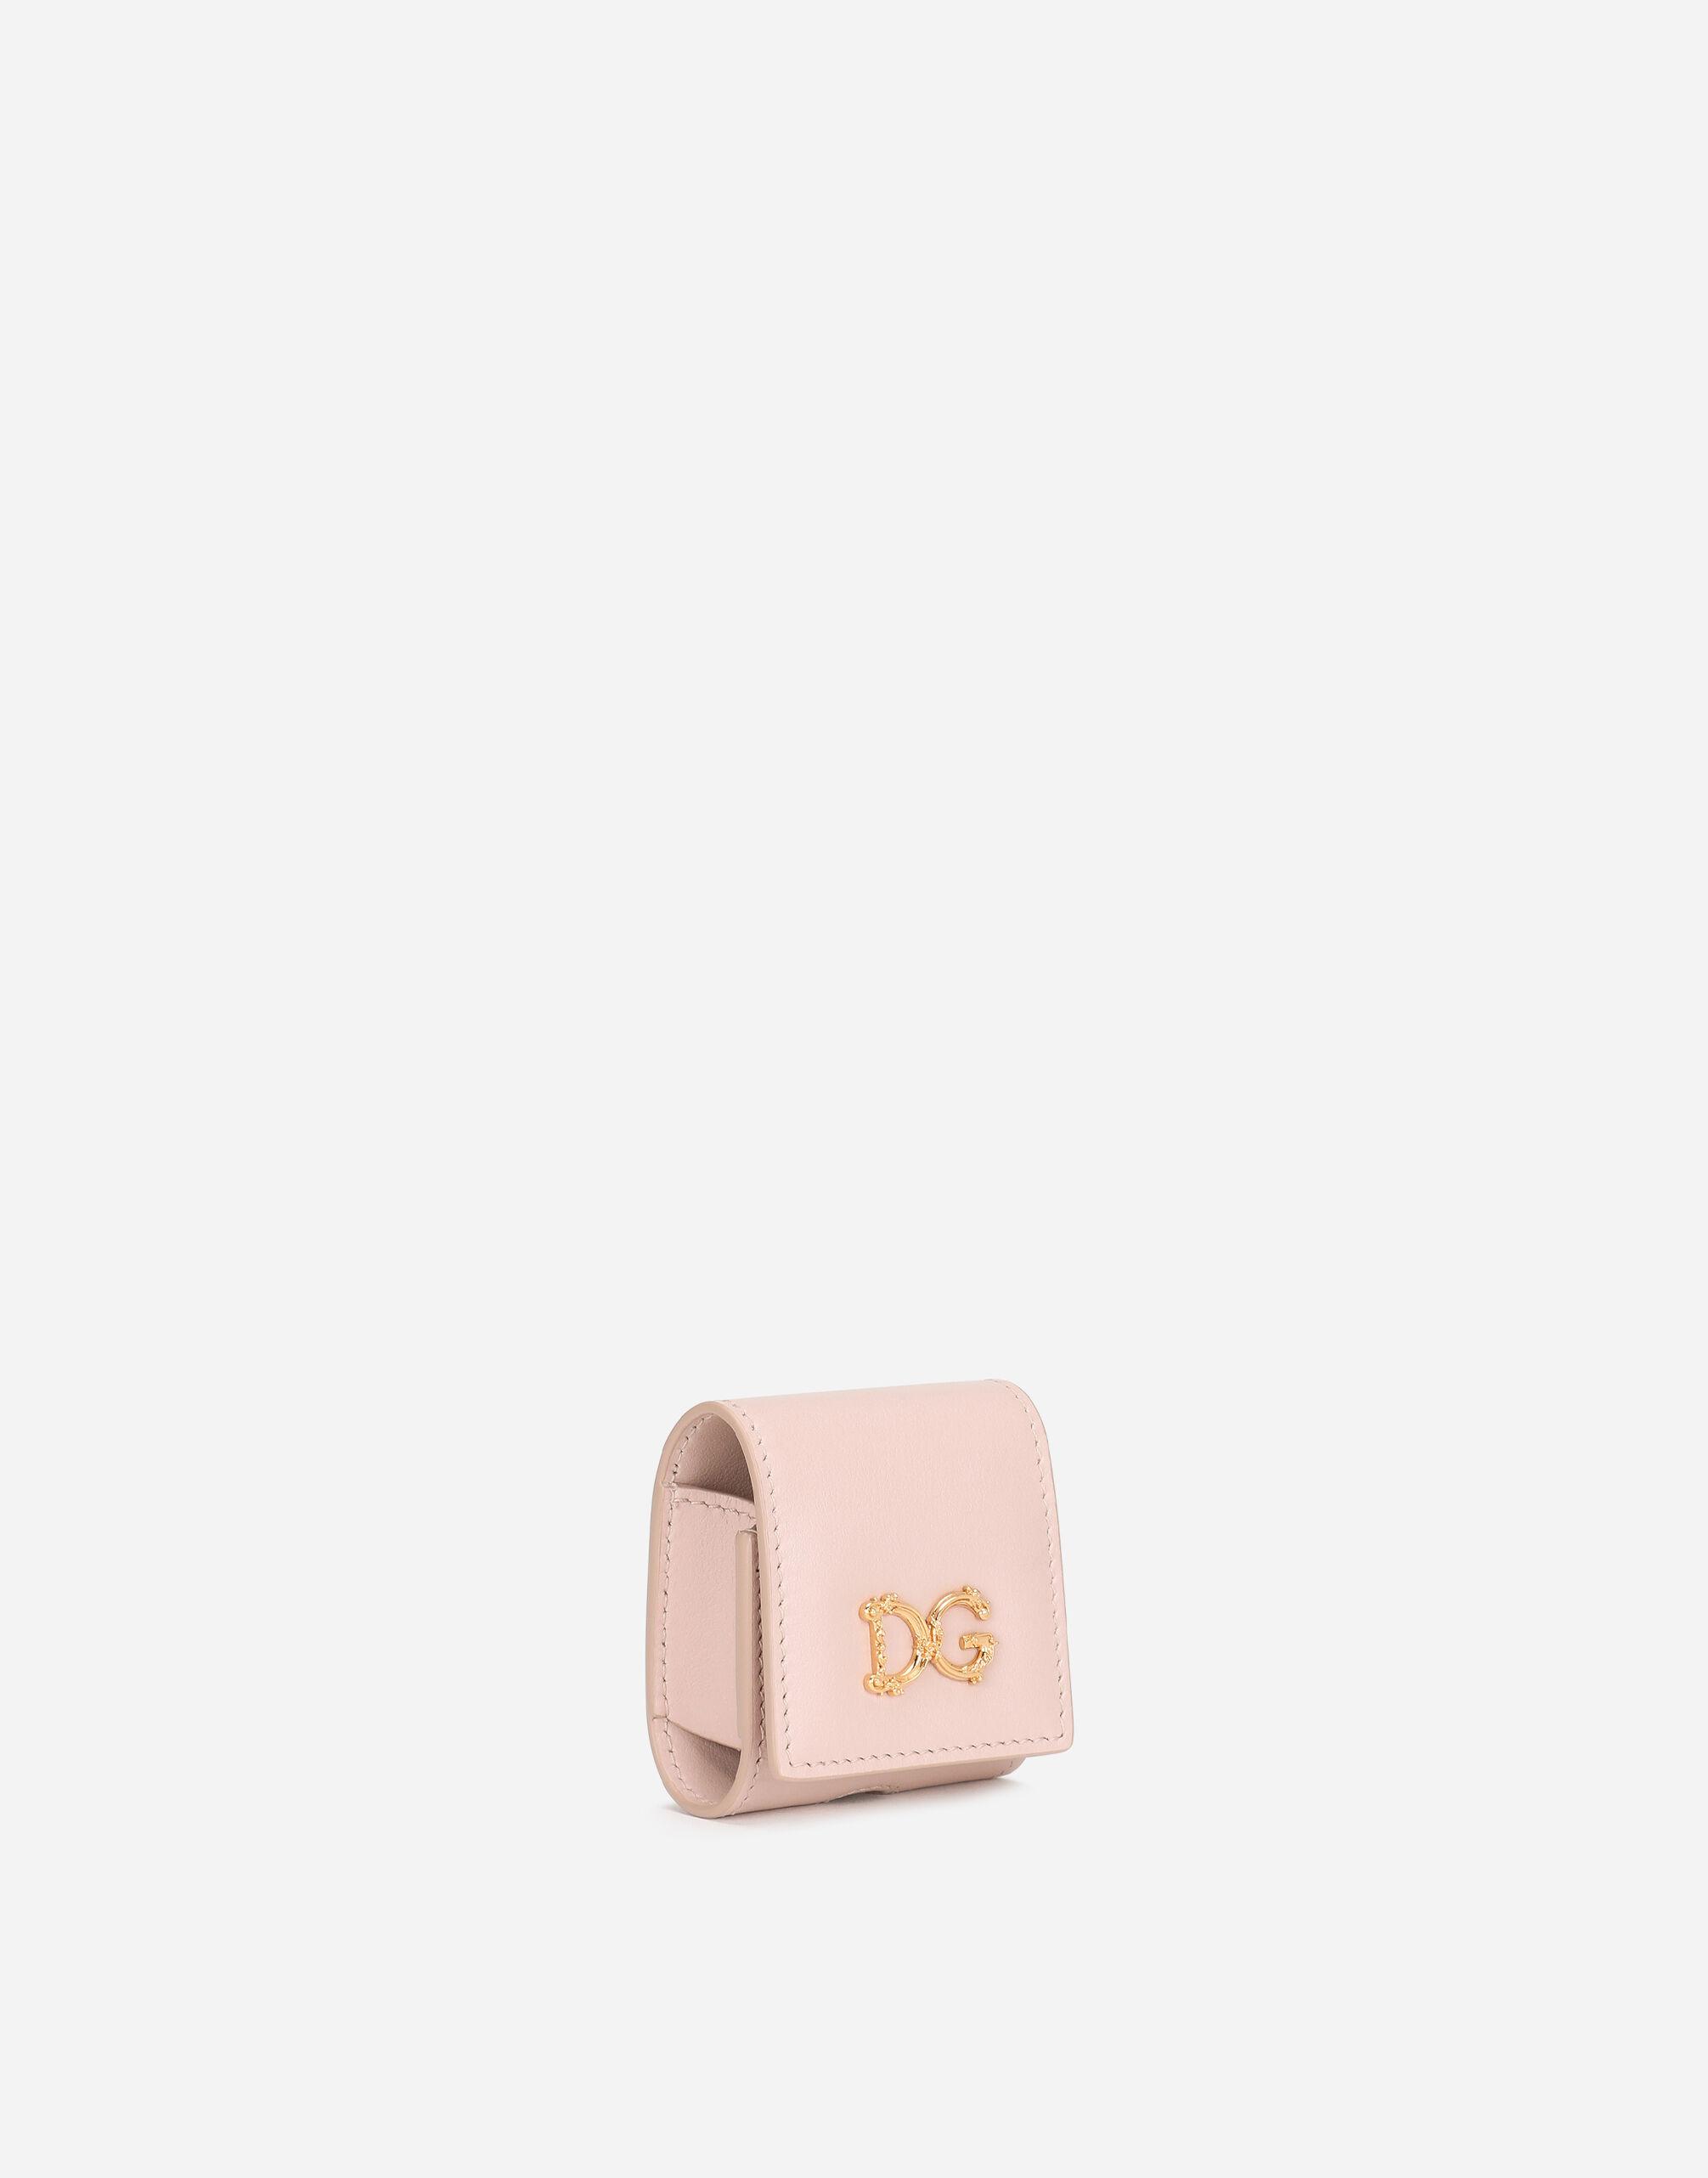 Dolce & Gabbana Calfskin Airpods Case With Baroque Dg Logo in Pink | Lyst